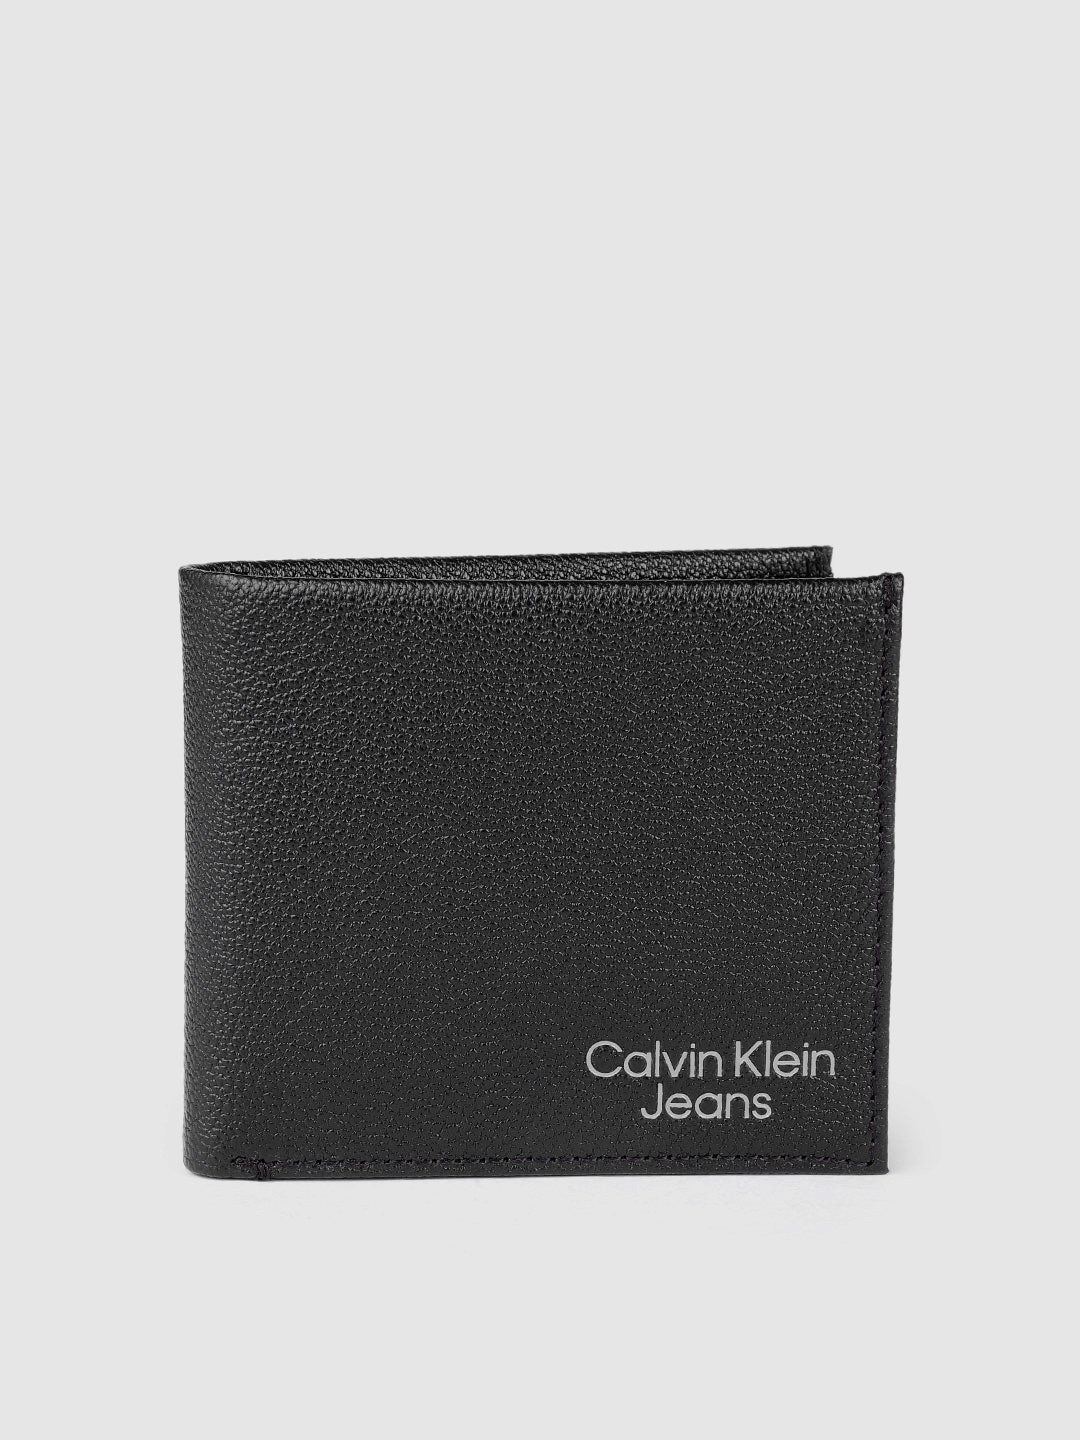 Calvin Klein wallets